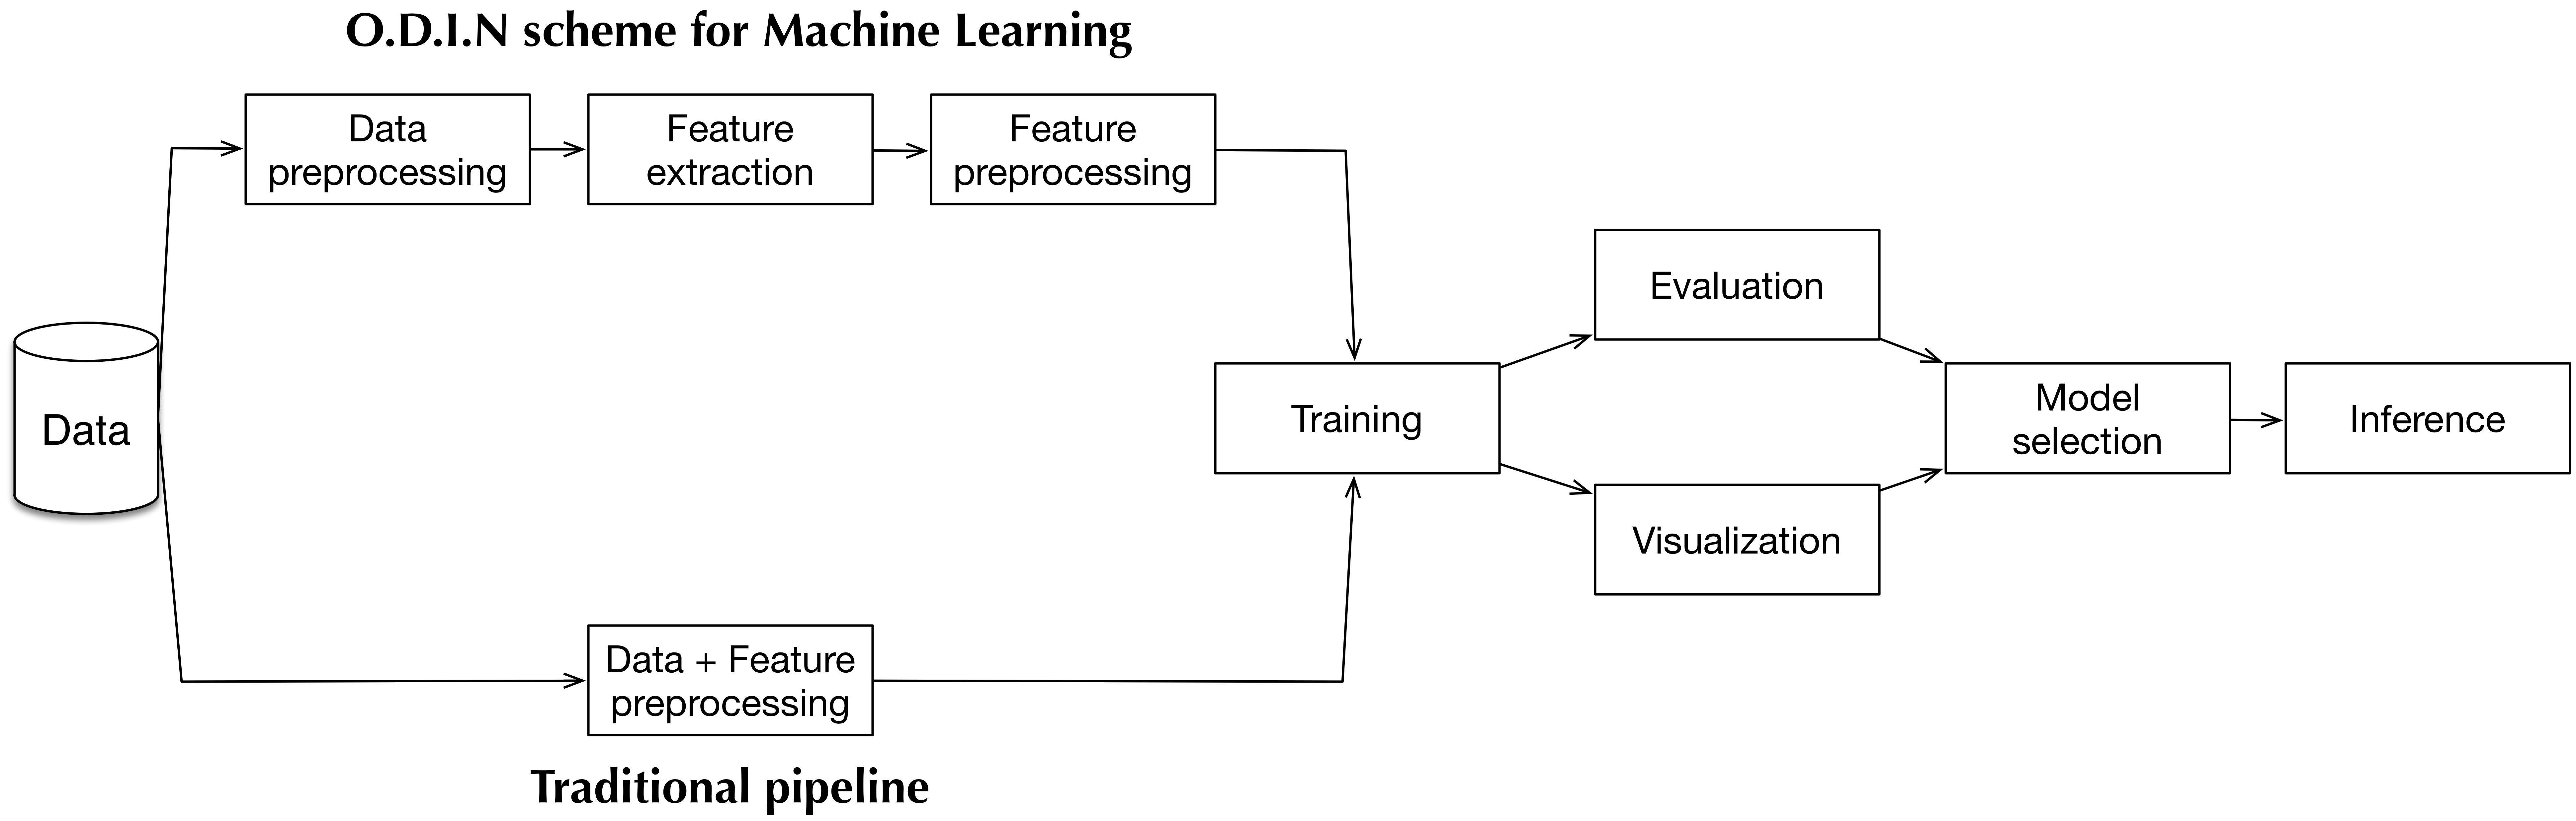 O.D.I.N scheme for machine learning